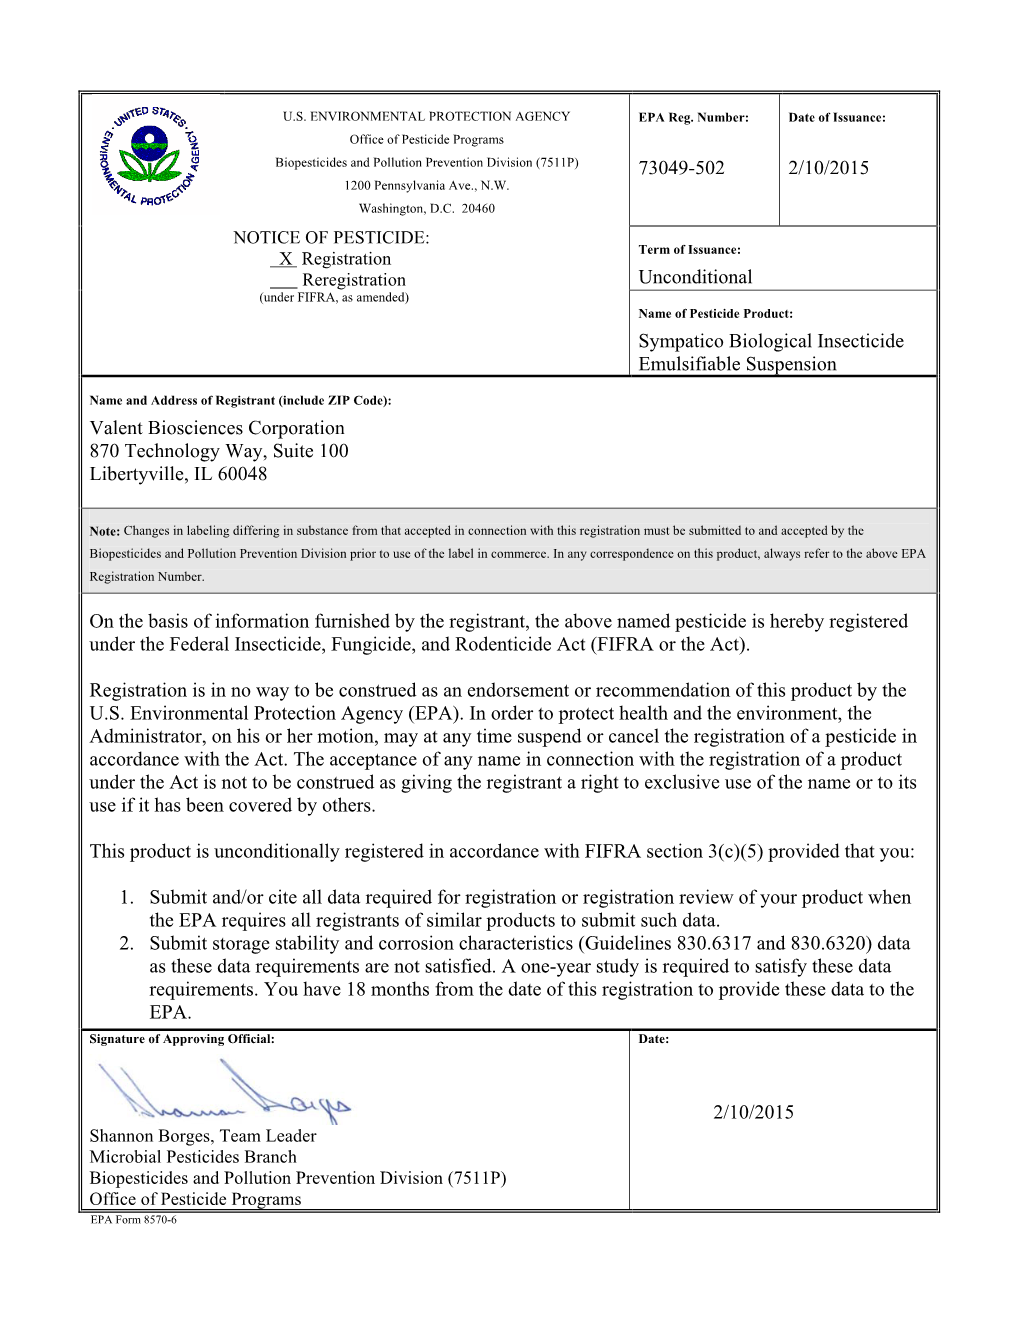 US EPA, Pesticide Product Label, VBC -60397,02/10/2015